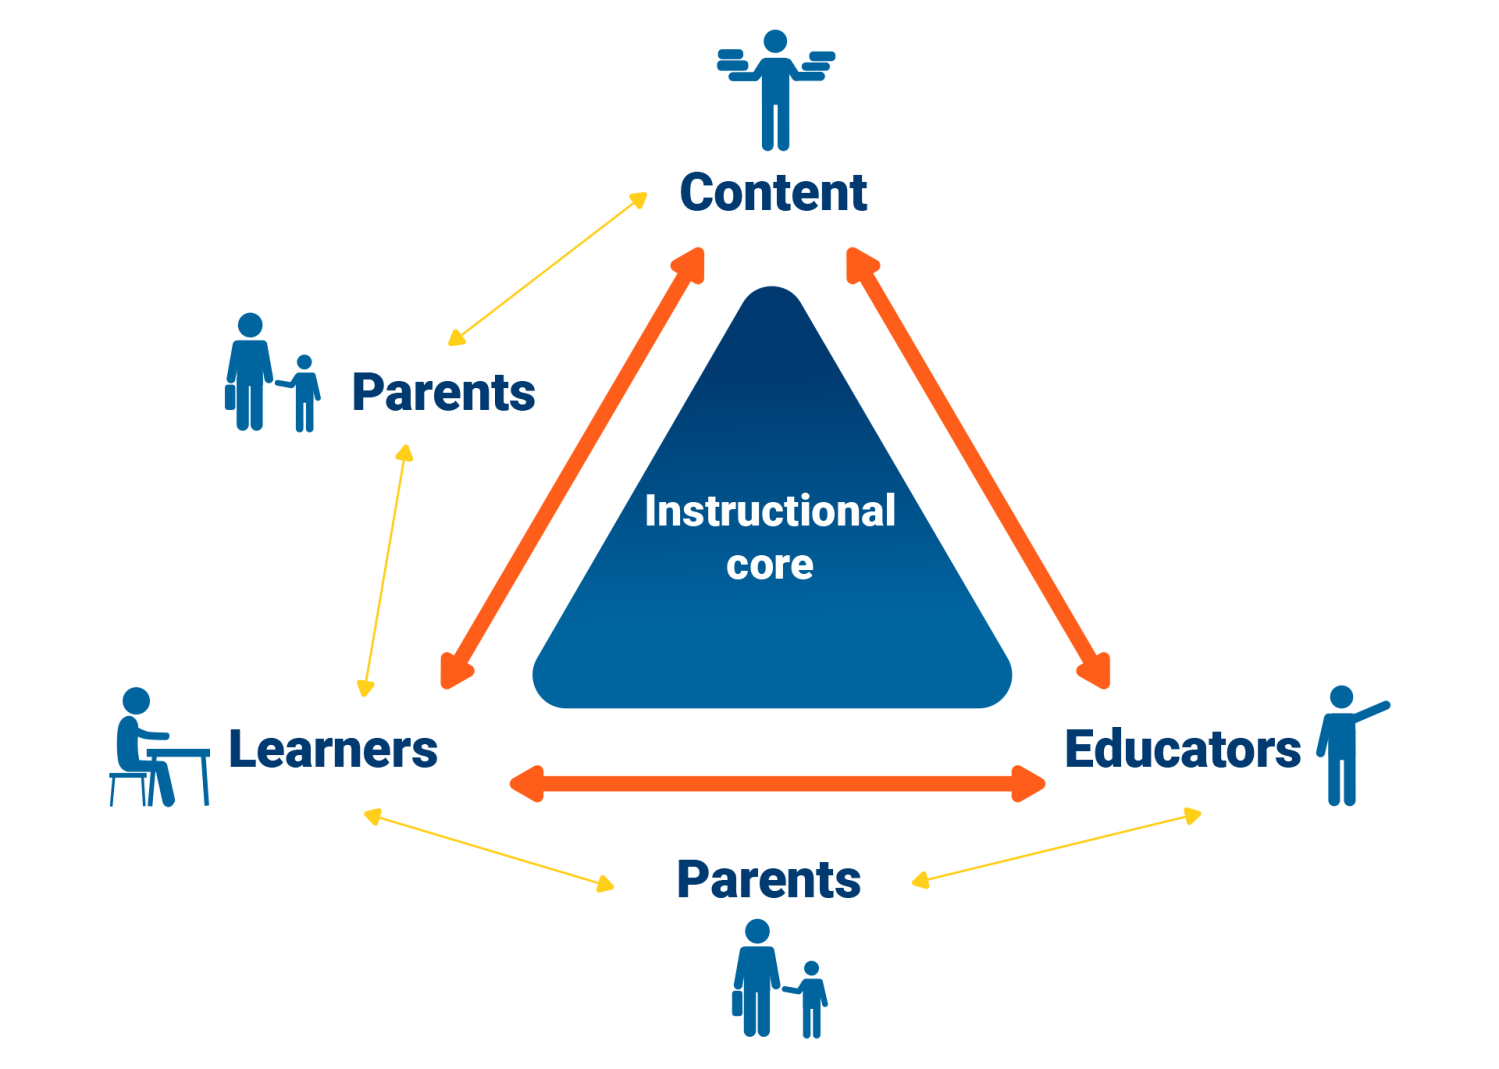 Figure 2. The instructional core